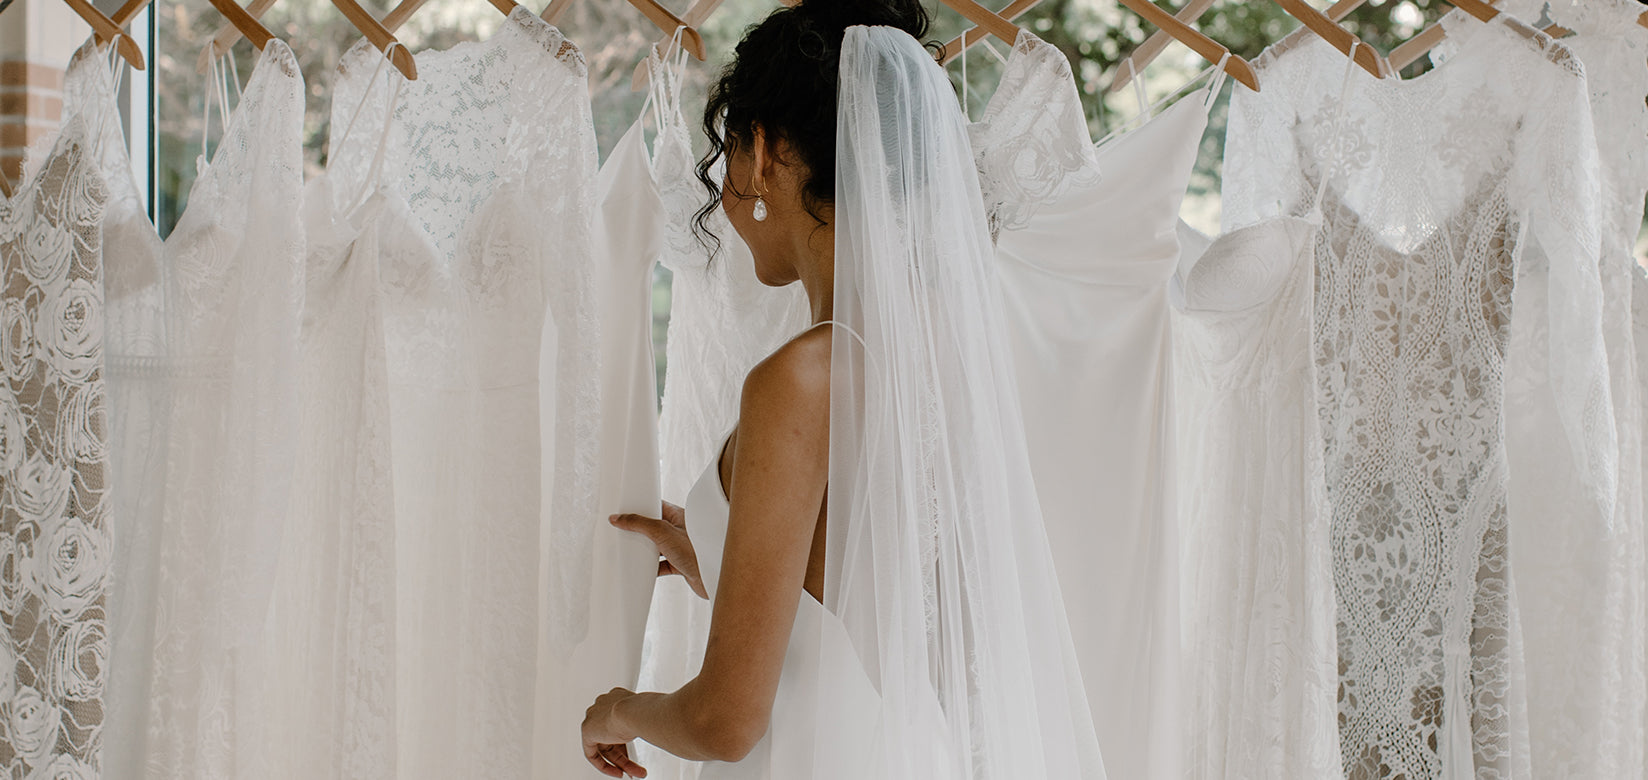 wearing wedding dress looking at wedding dresses on a rail